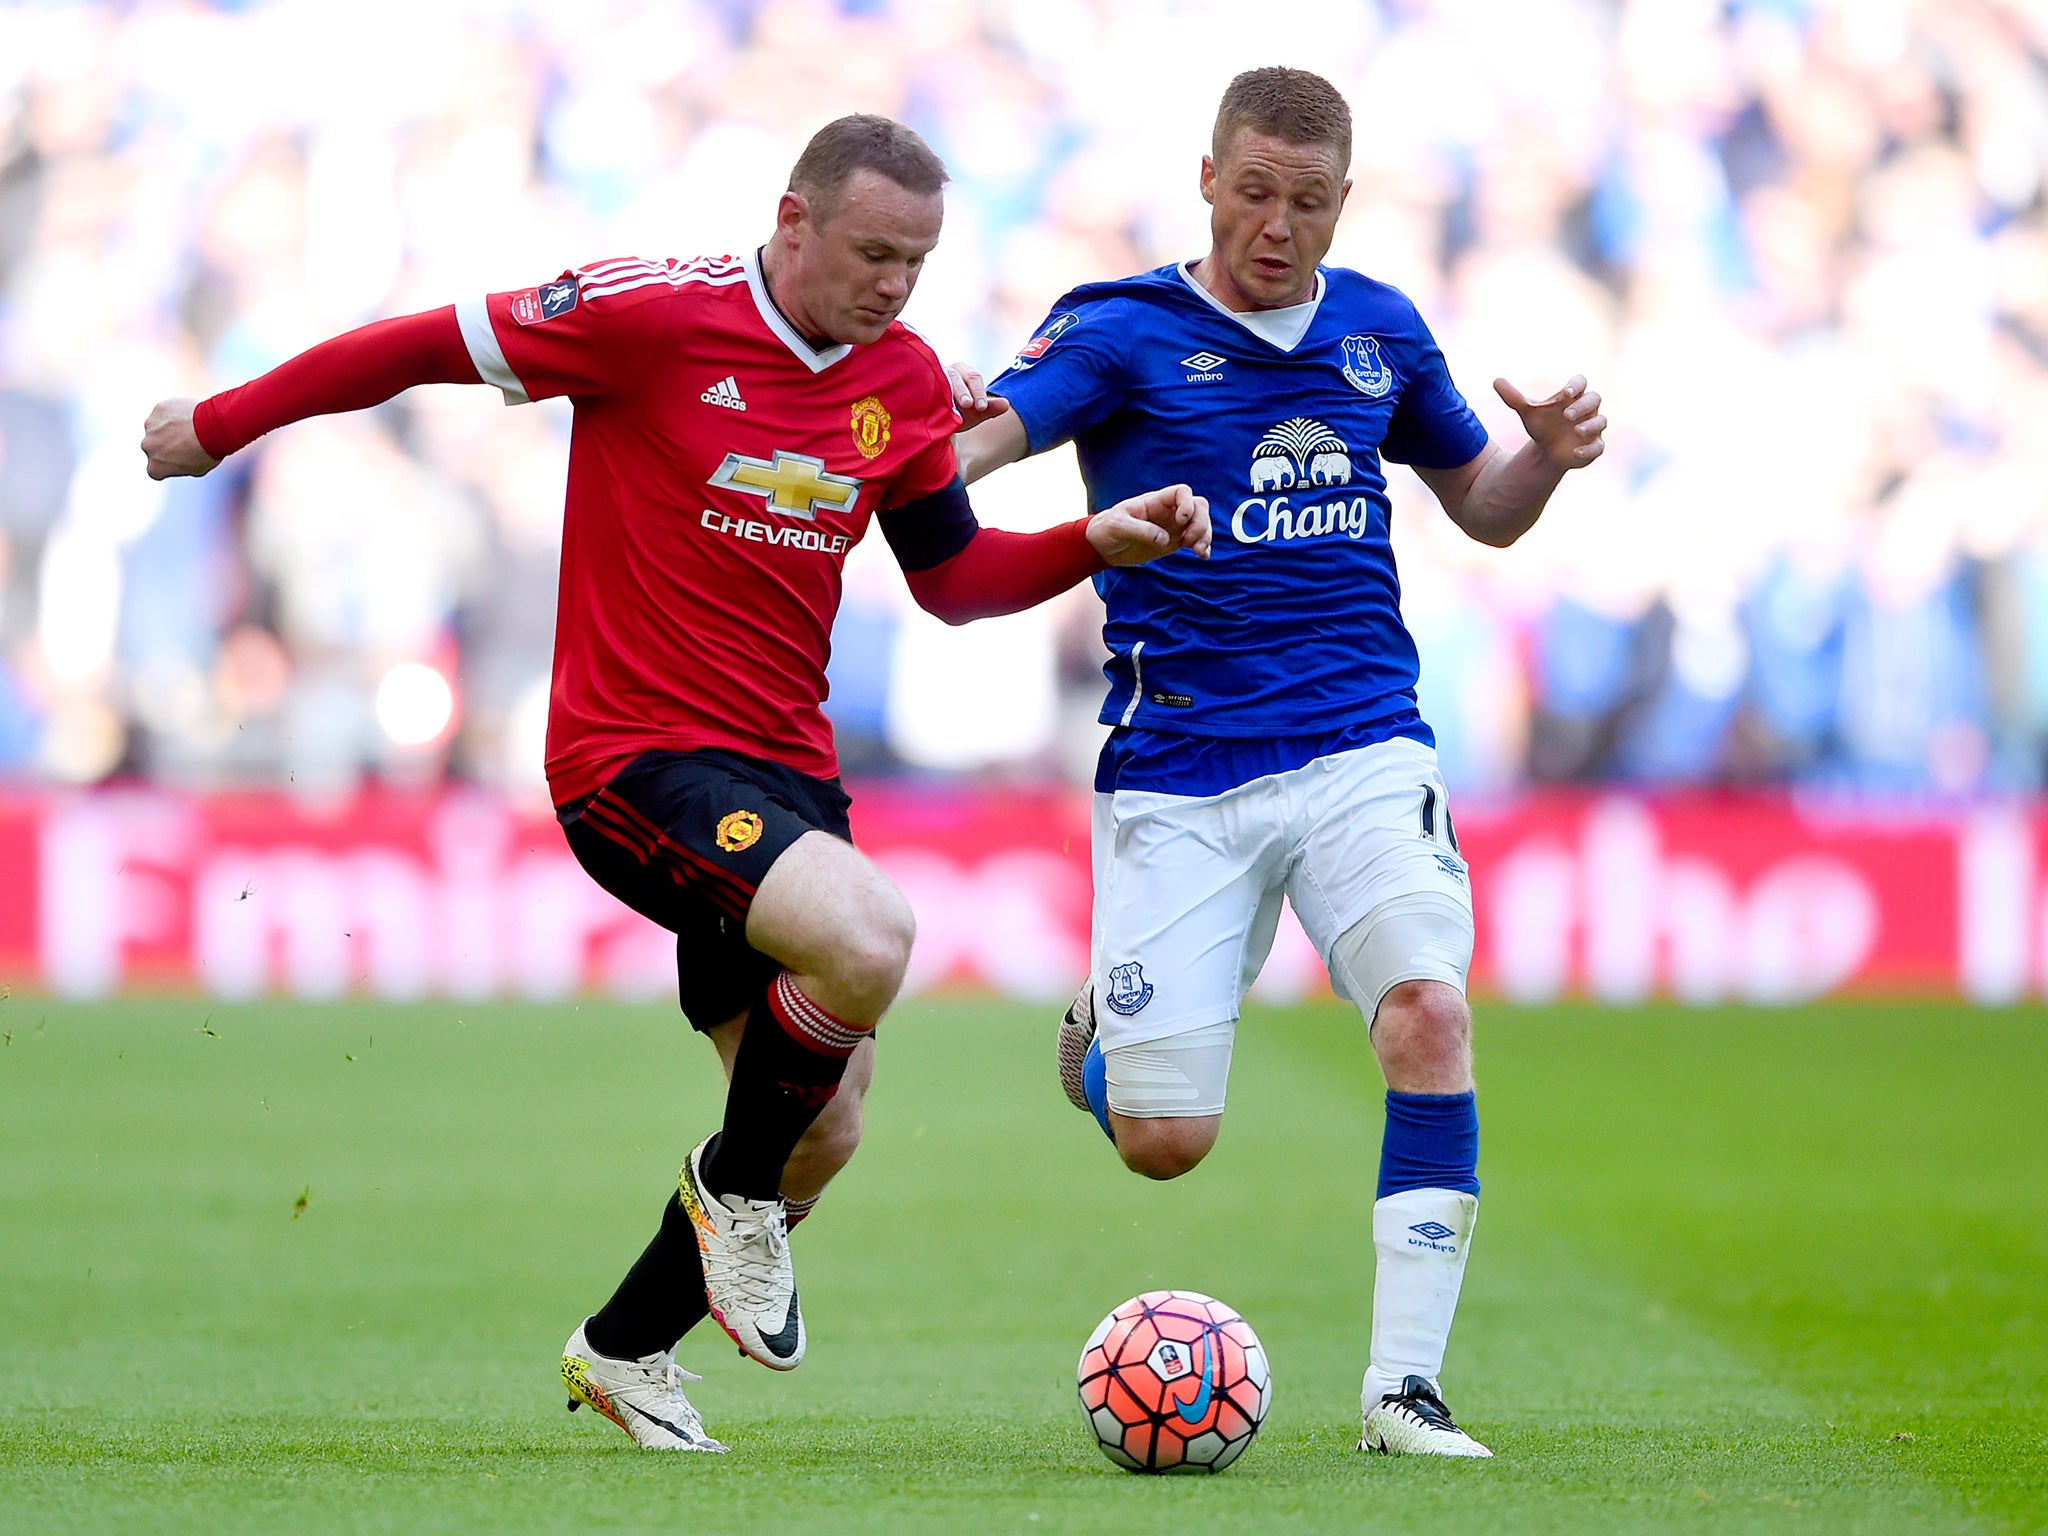 Wayne Rooney powers forward from midfield